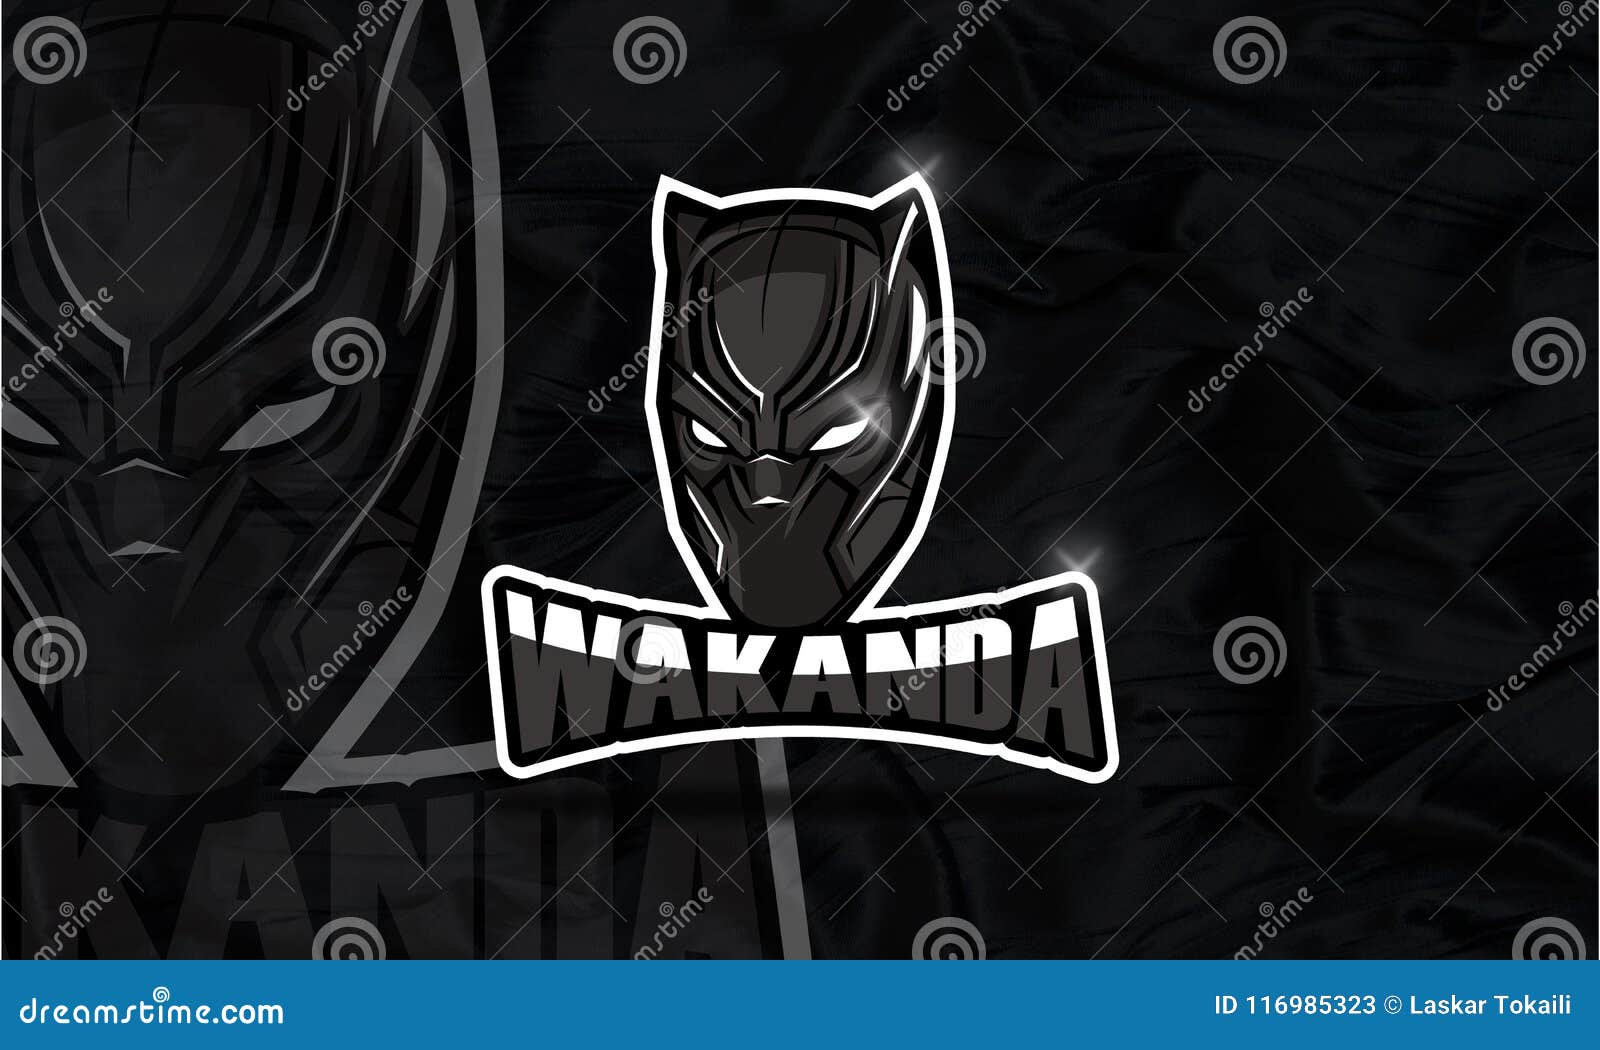 Wakanda Logo Esport Game and Youtube Editorial Stock Photo ...